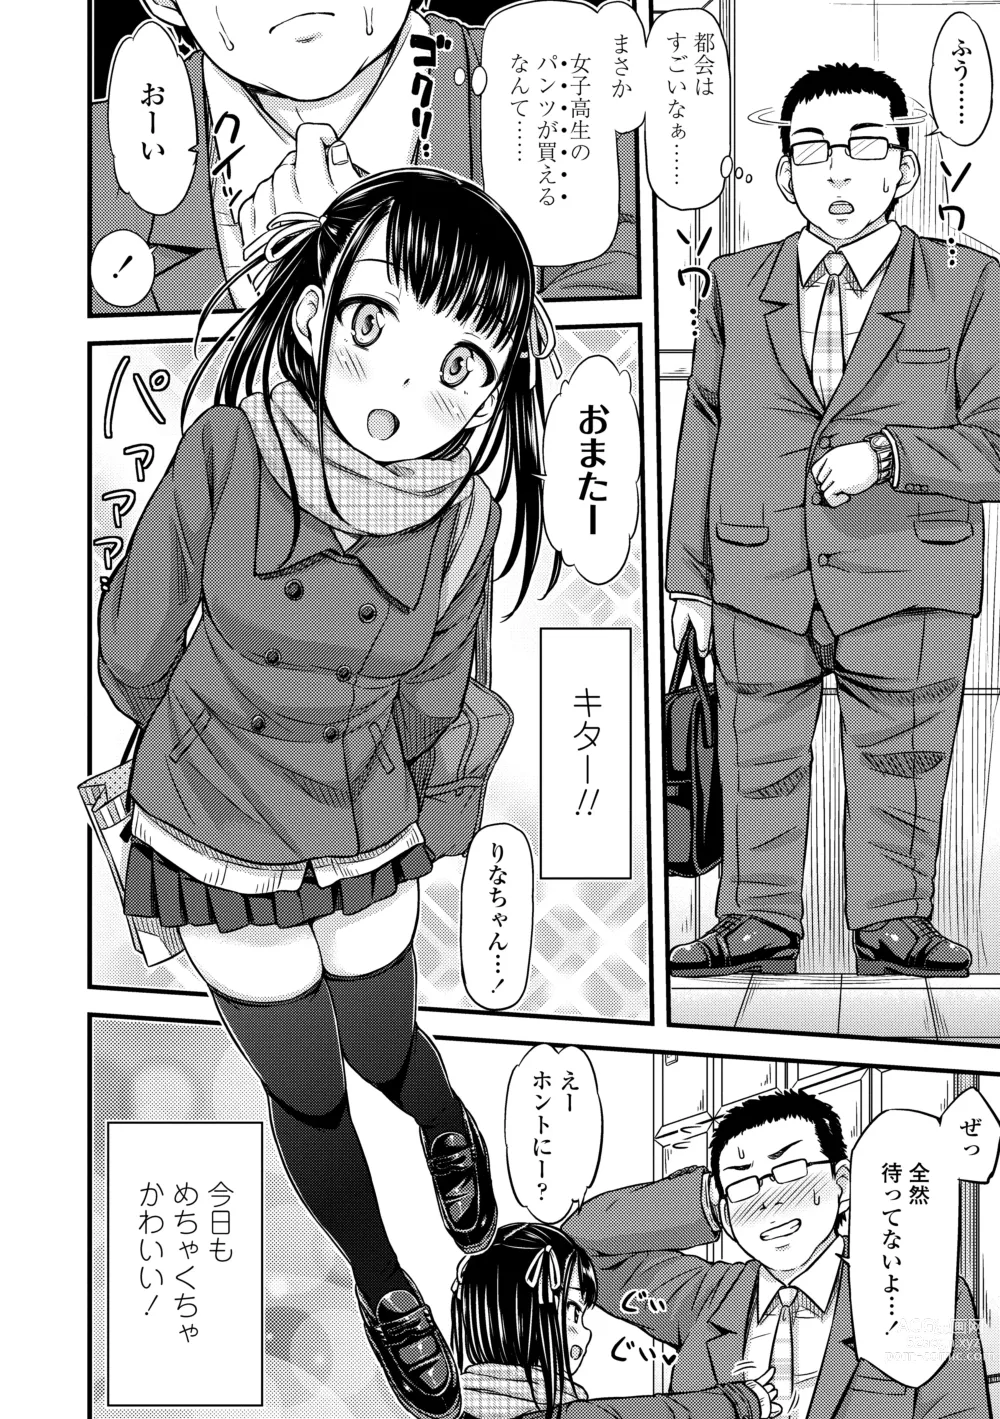 Page 6 of manga JK no Katachi